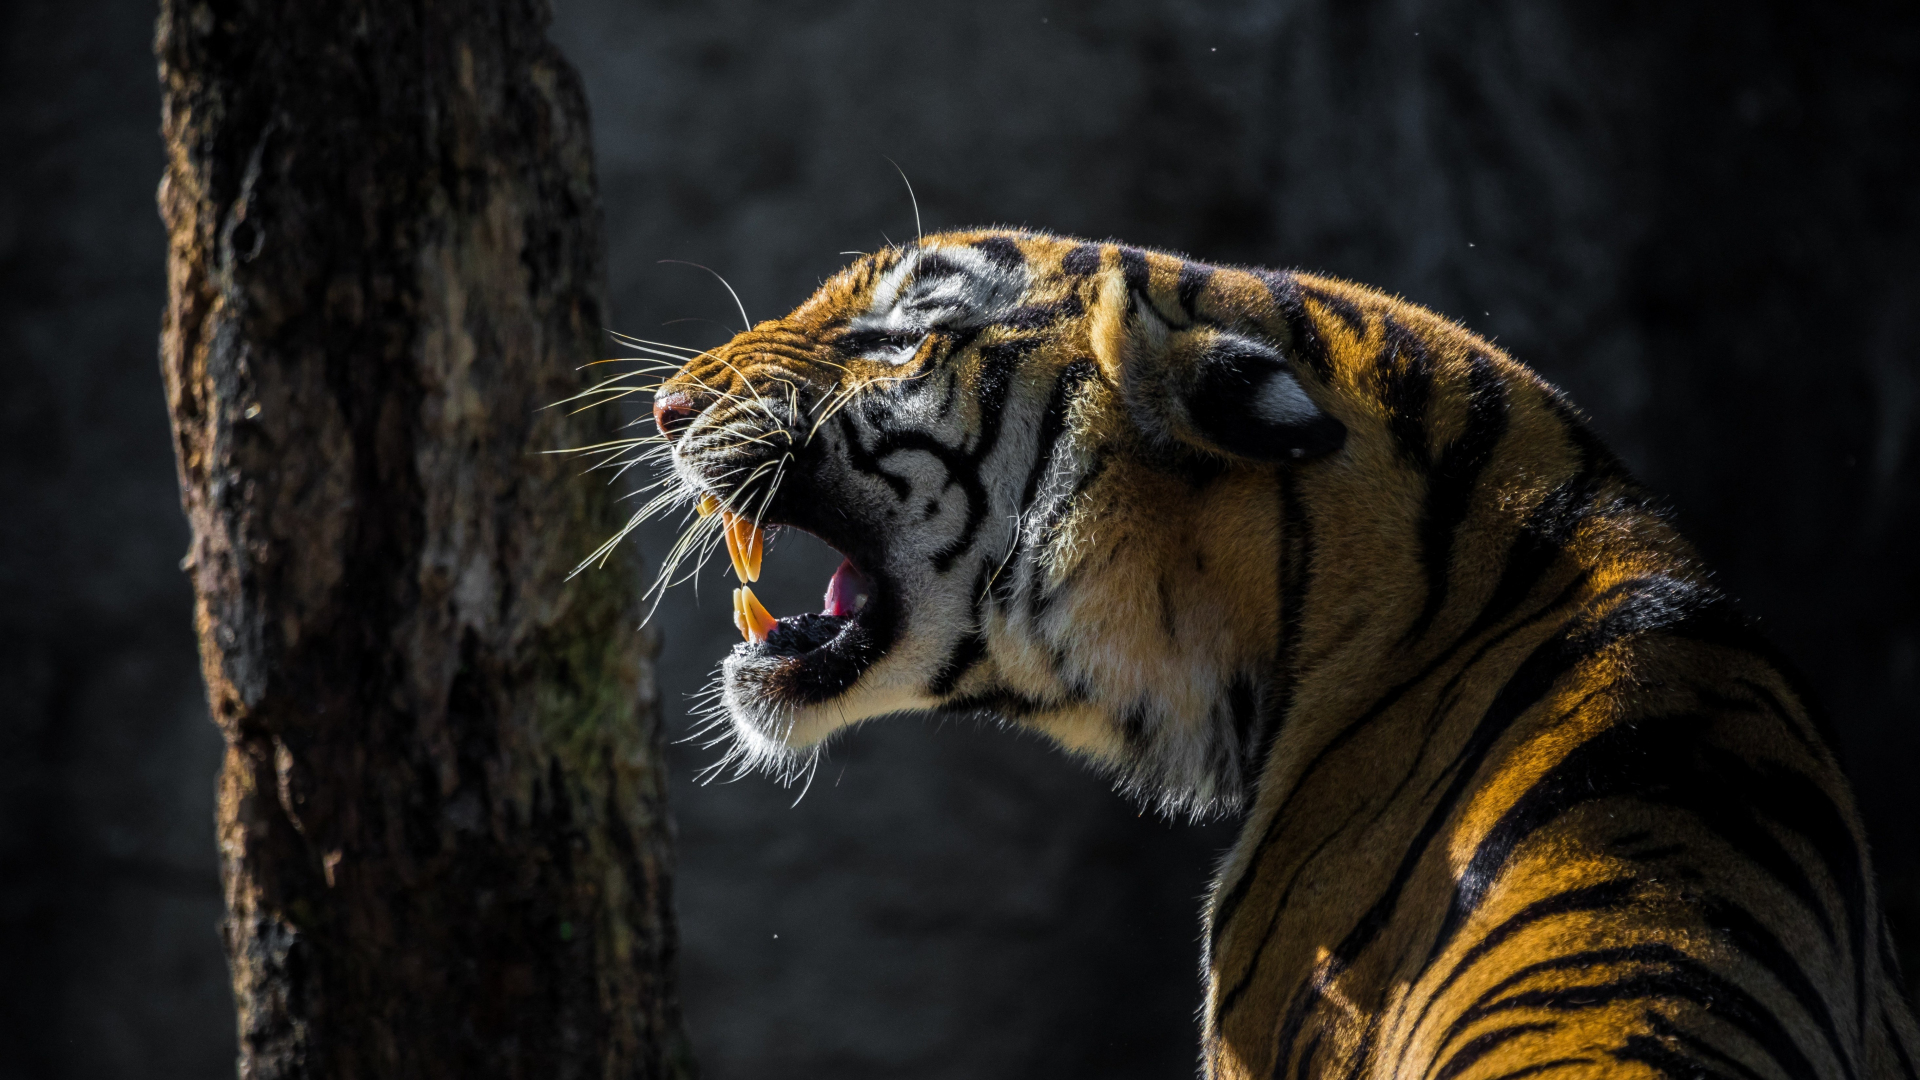 Download 1920x1080 wallpaper  tiger  roar wild animal 